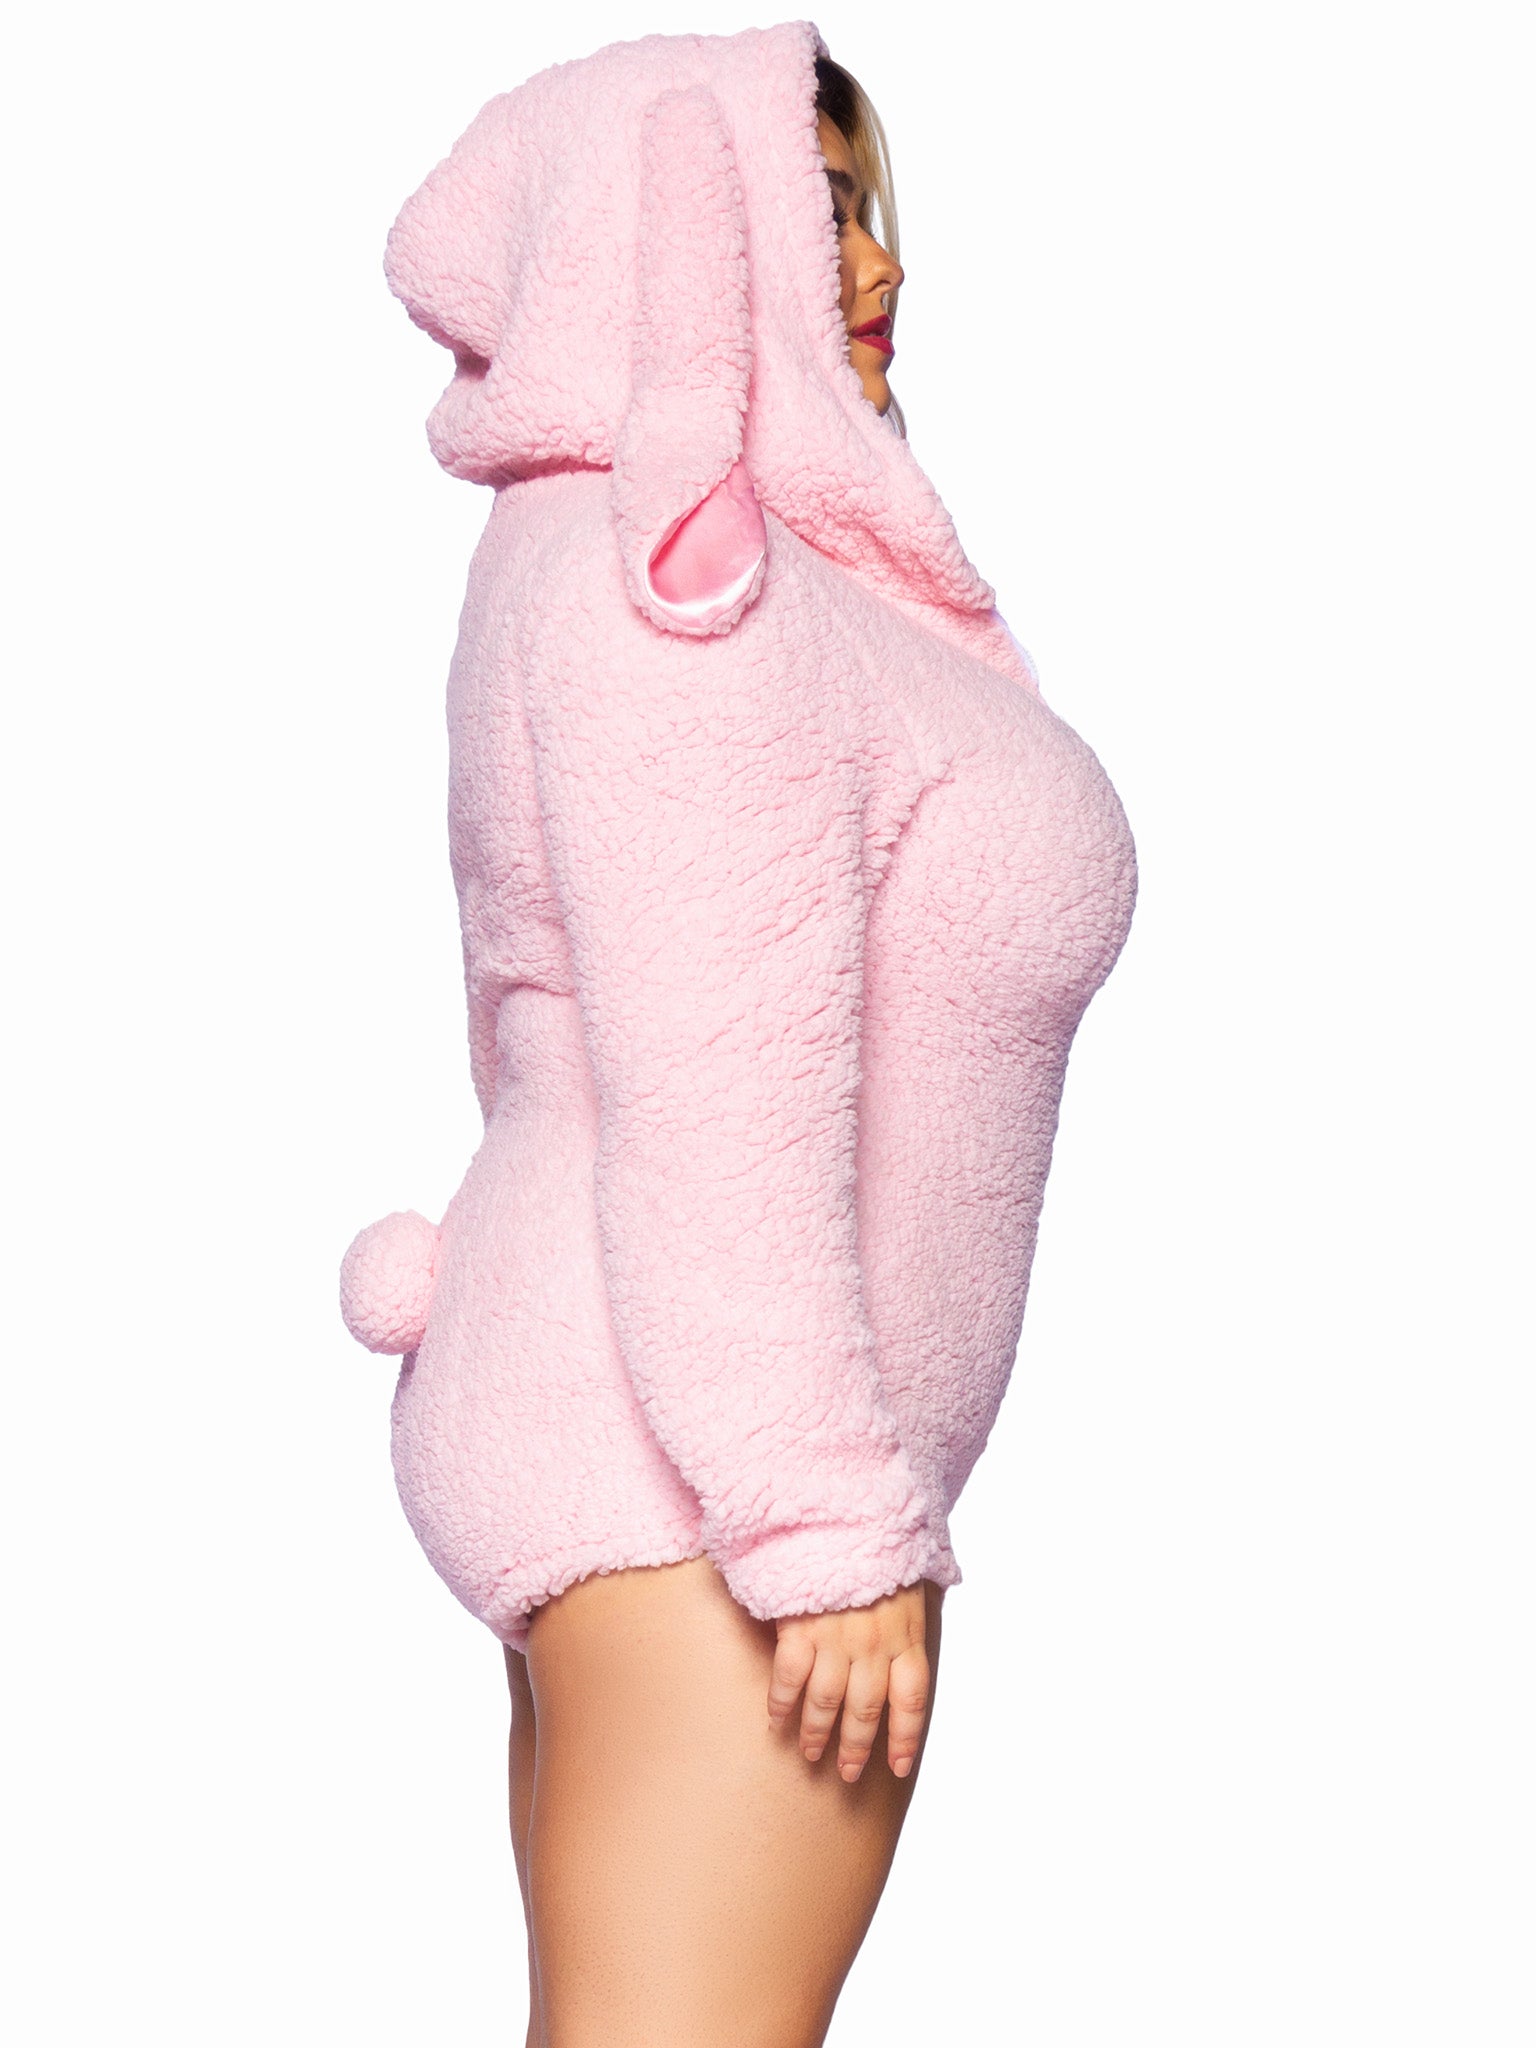 Free. Woman Plus Size Cuddle Bunny Costume. Face Swap AI ID:946832